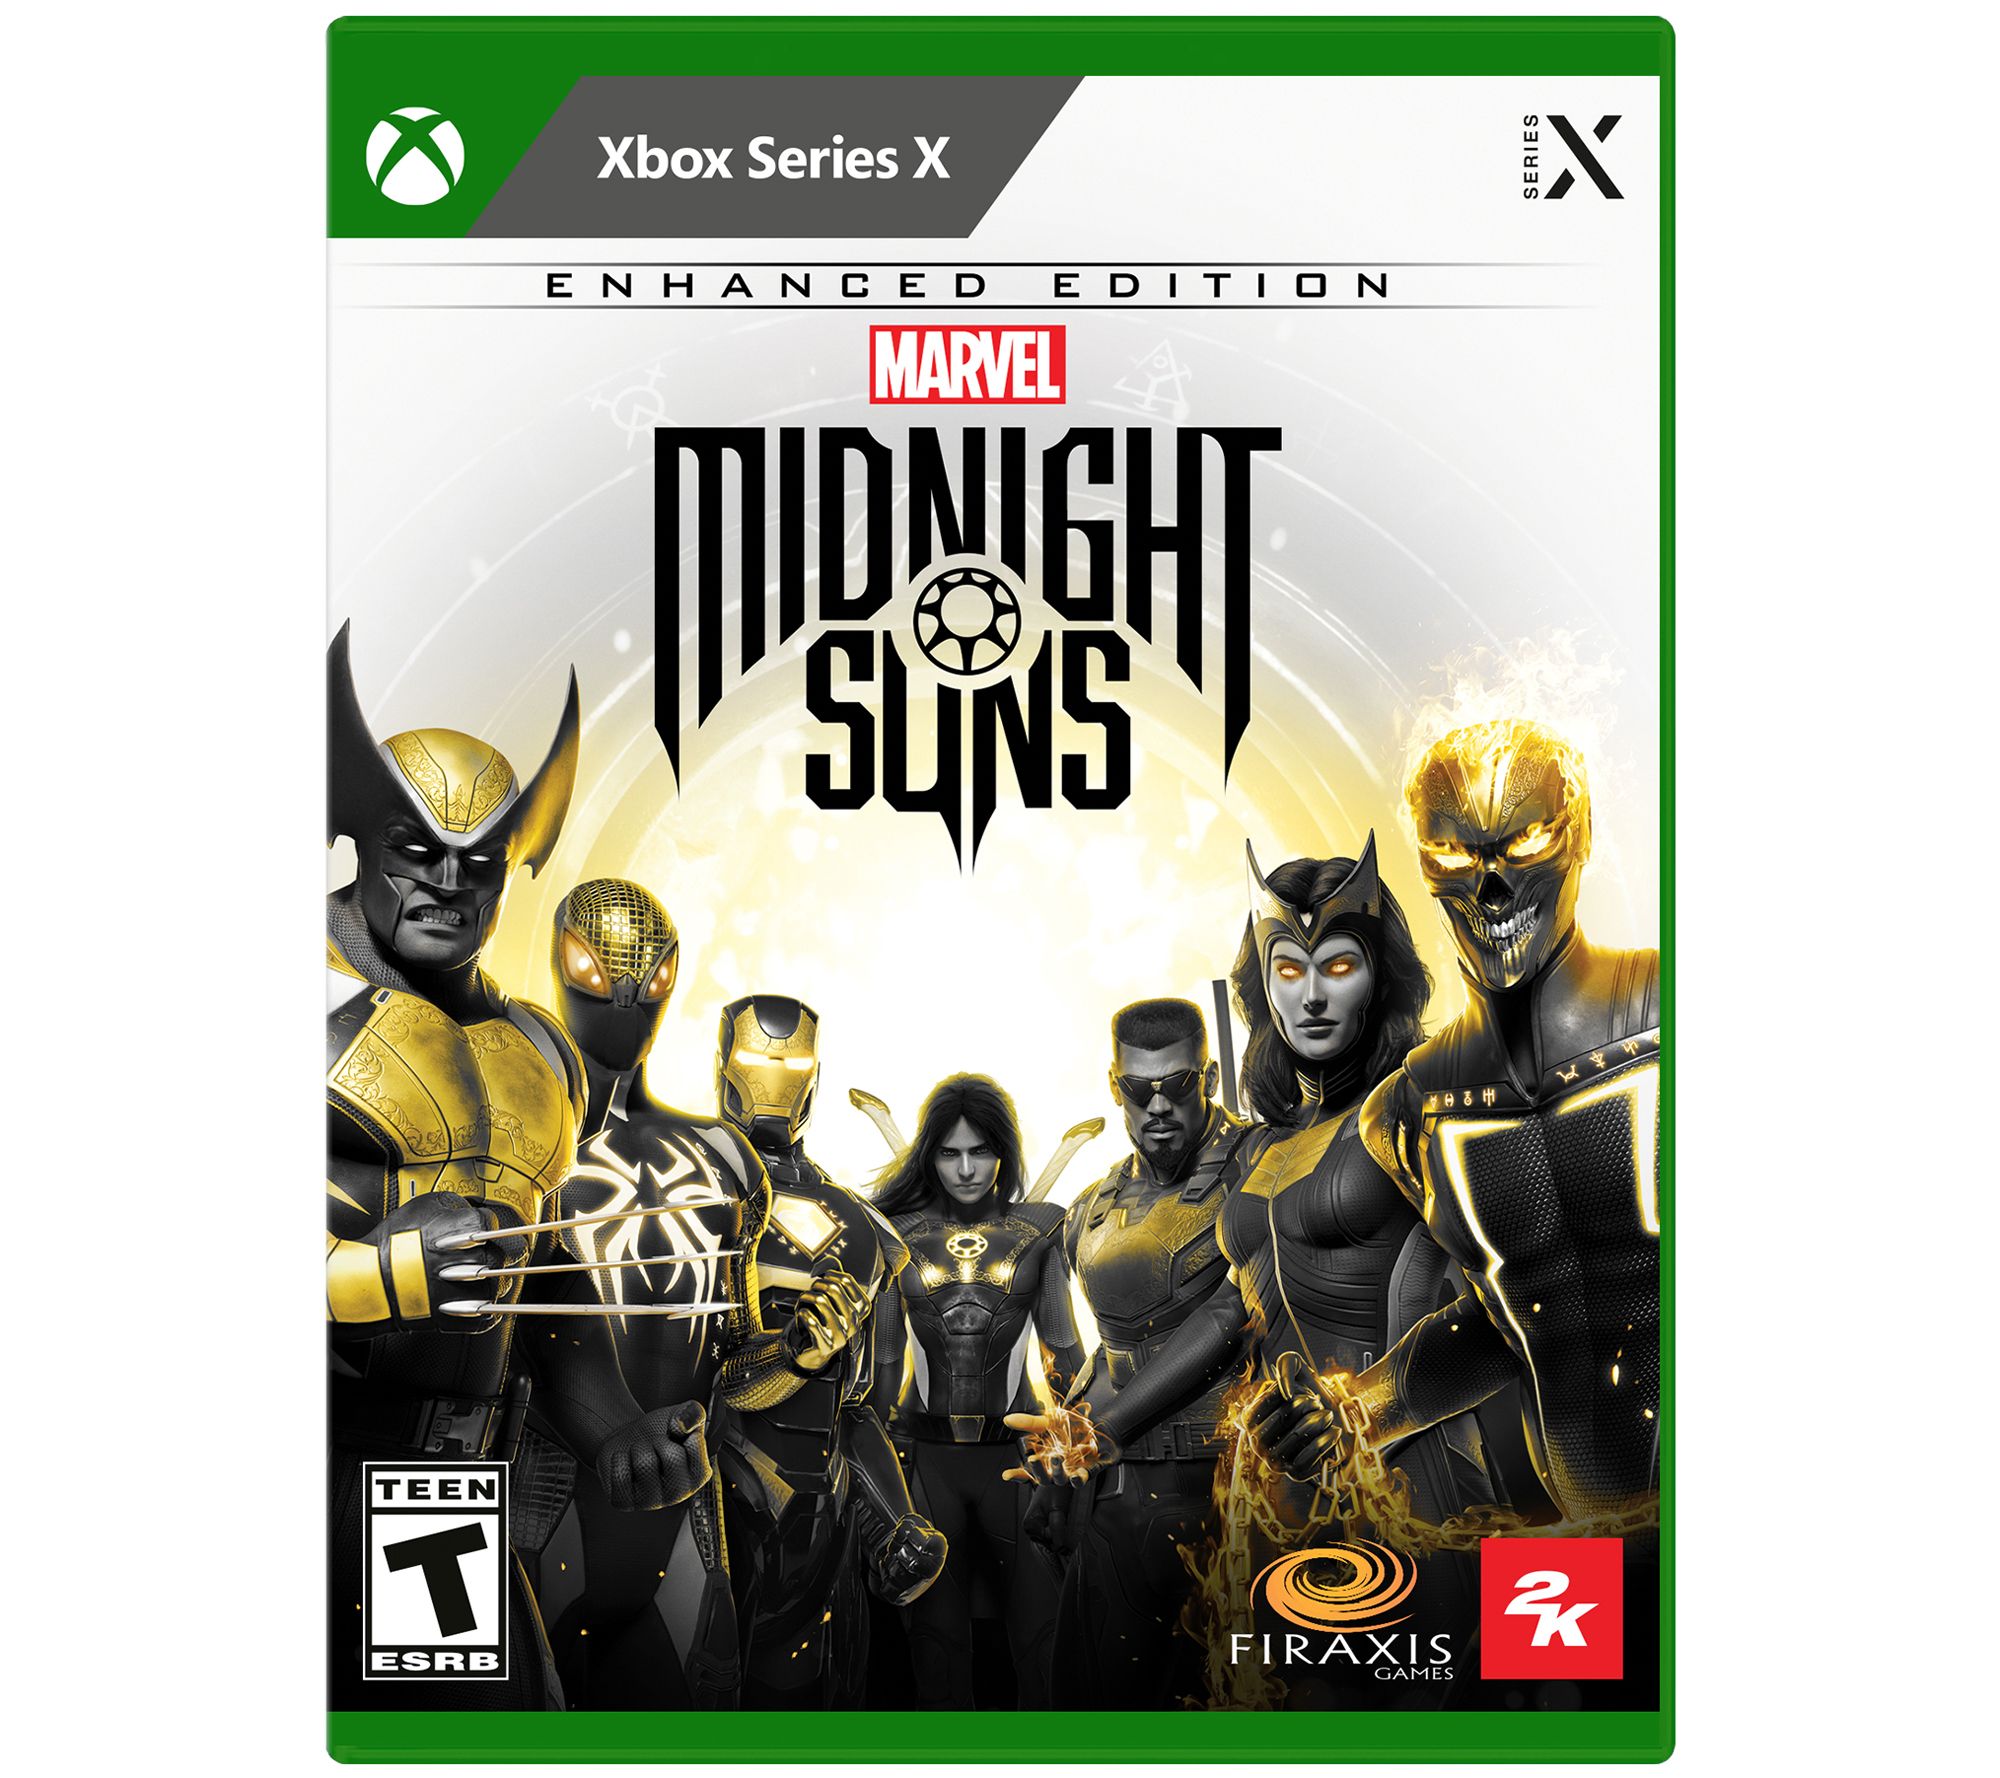 Mortal Kombat 1 – Xbox Series X - 21882679